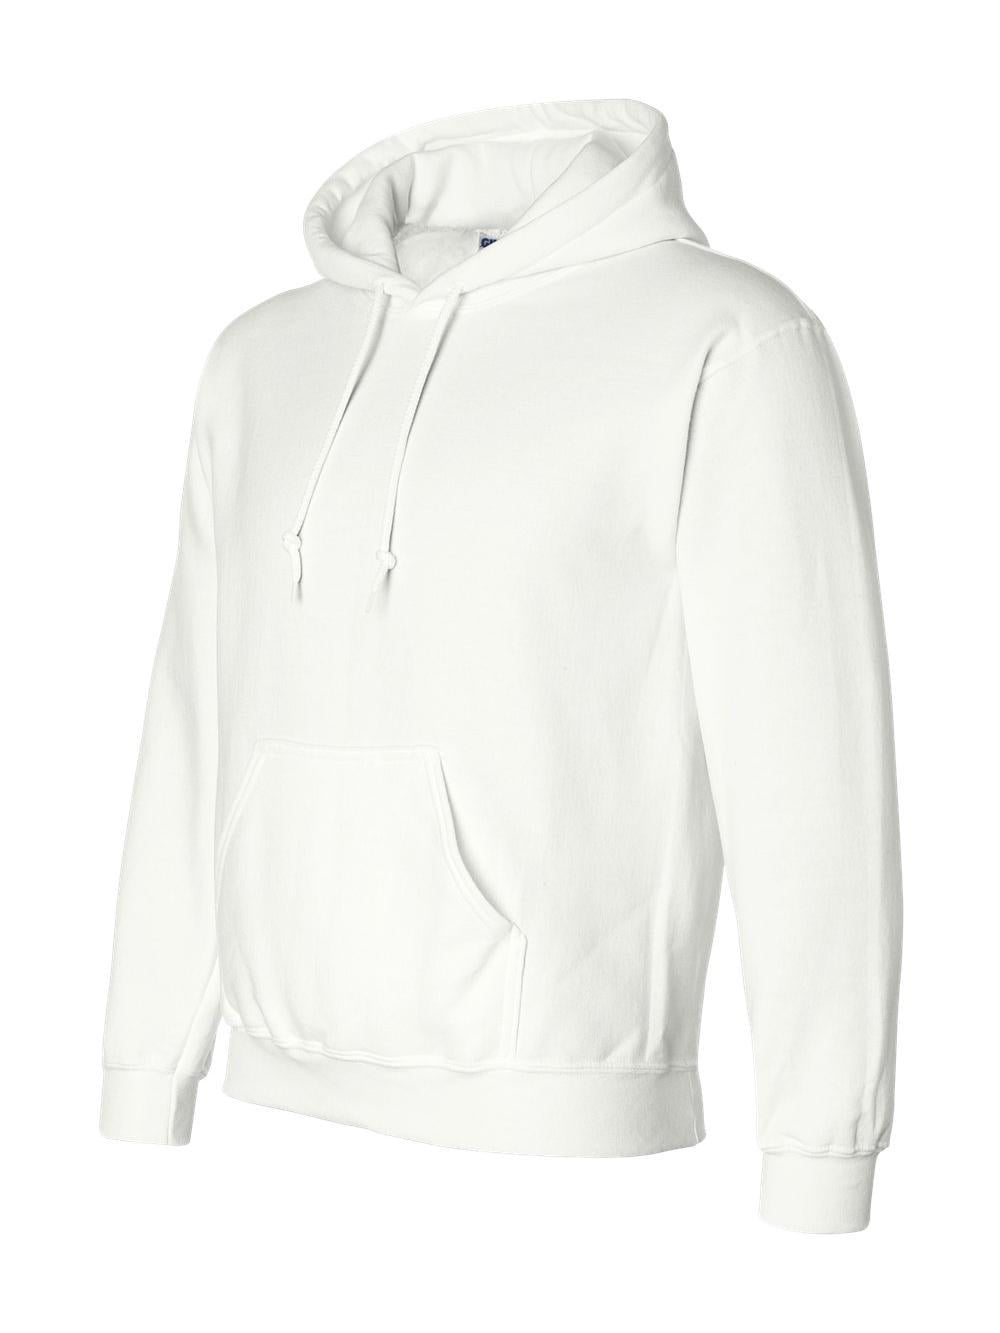 Mens sweatshirt plain pullover S to 2XL Gildan DryBlend Adult Hooded sweatshirt 